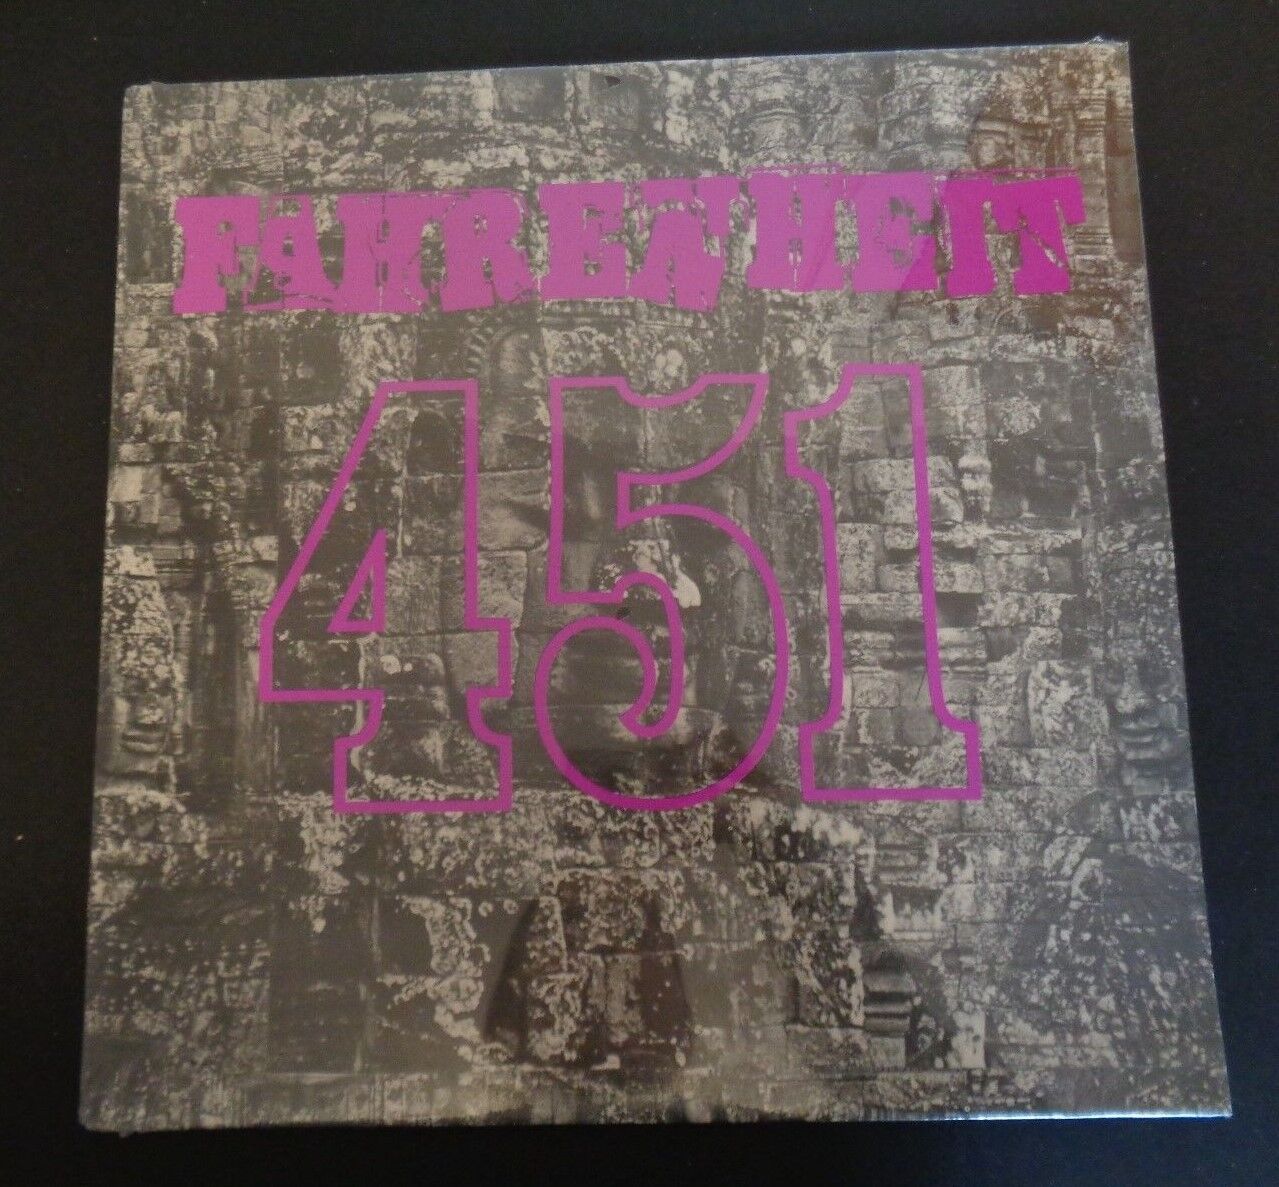 FAHRENHEIT 451 Vinyl Record NEW Sealed 1986  10 Songs